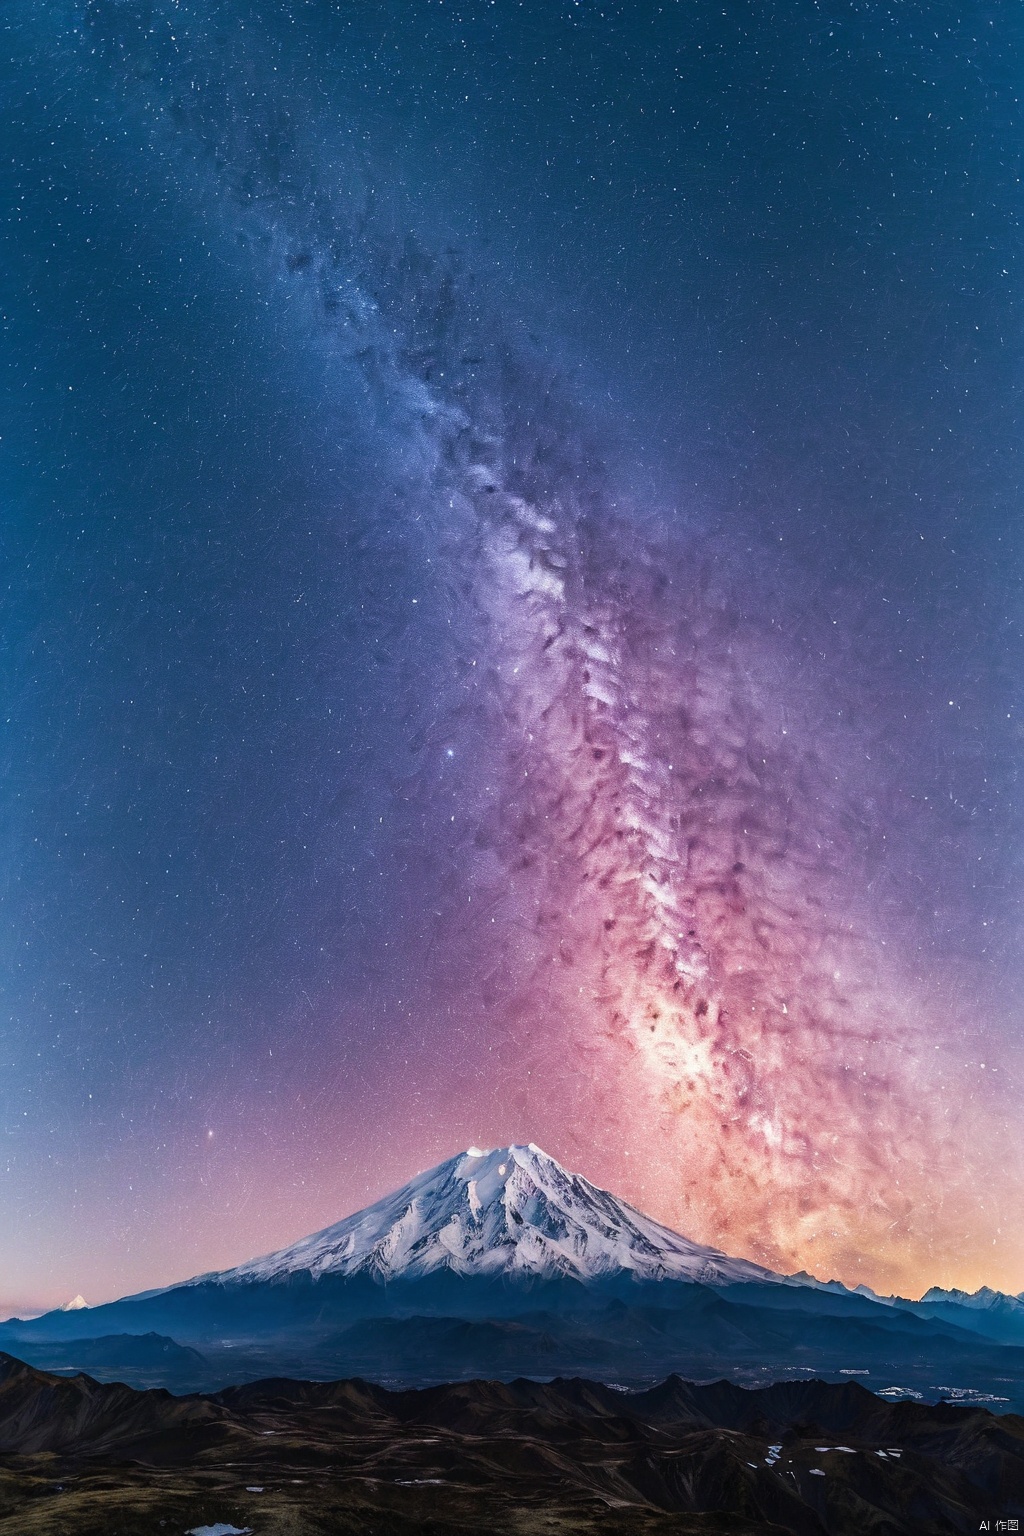  duobaansheying,Fuji lens, movie color scheme, snow-capped mountains, starry sky, Milky Way